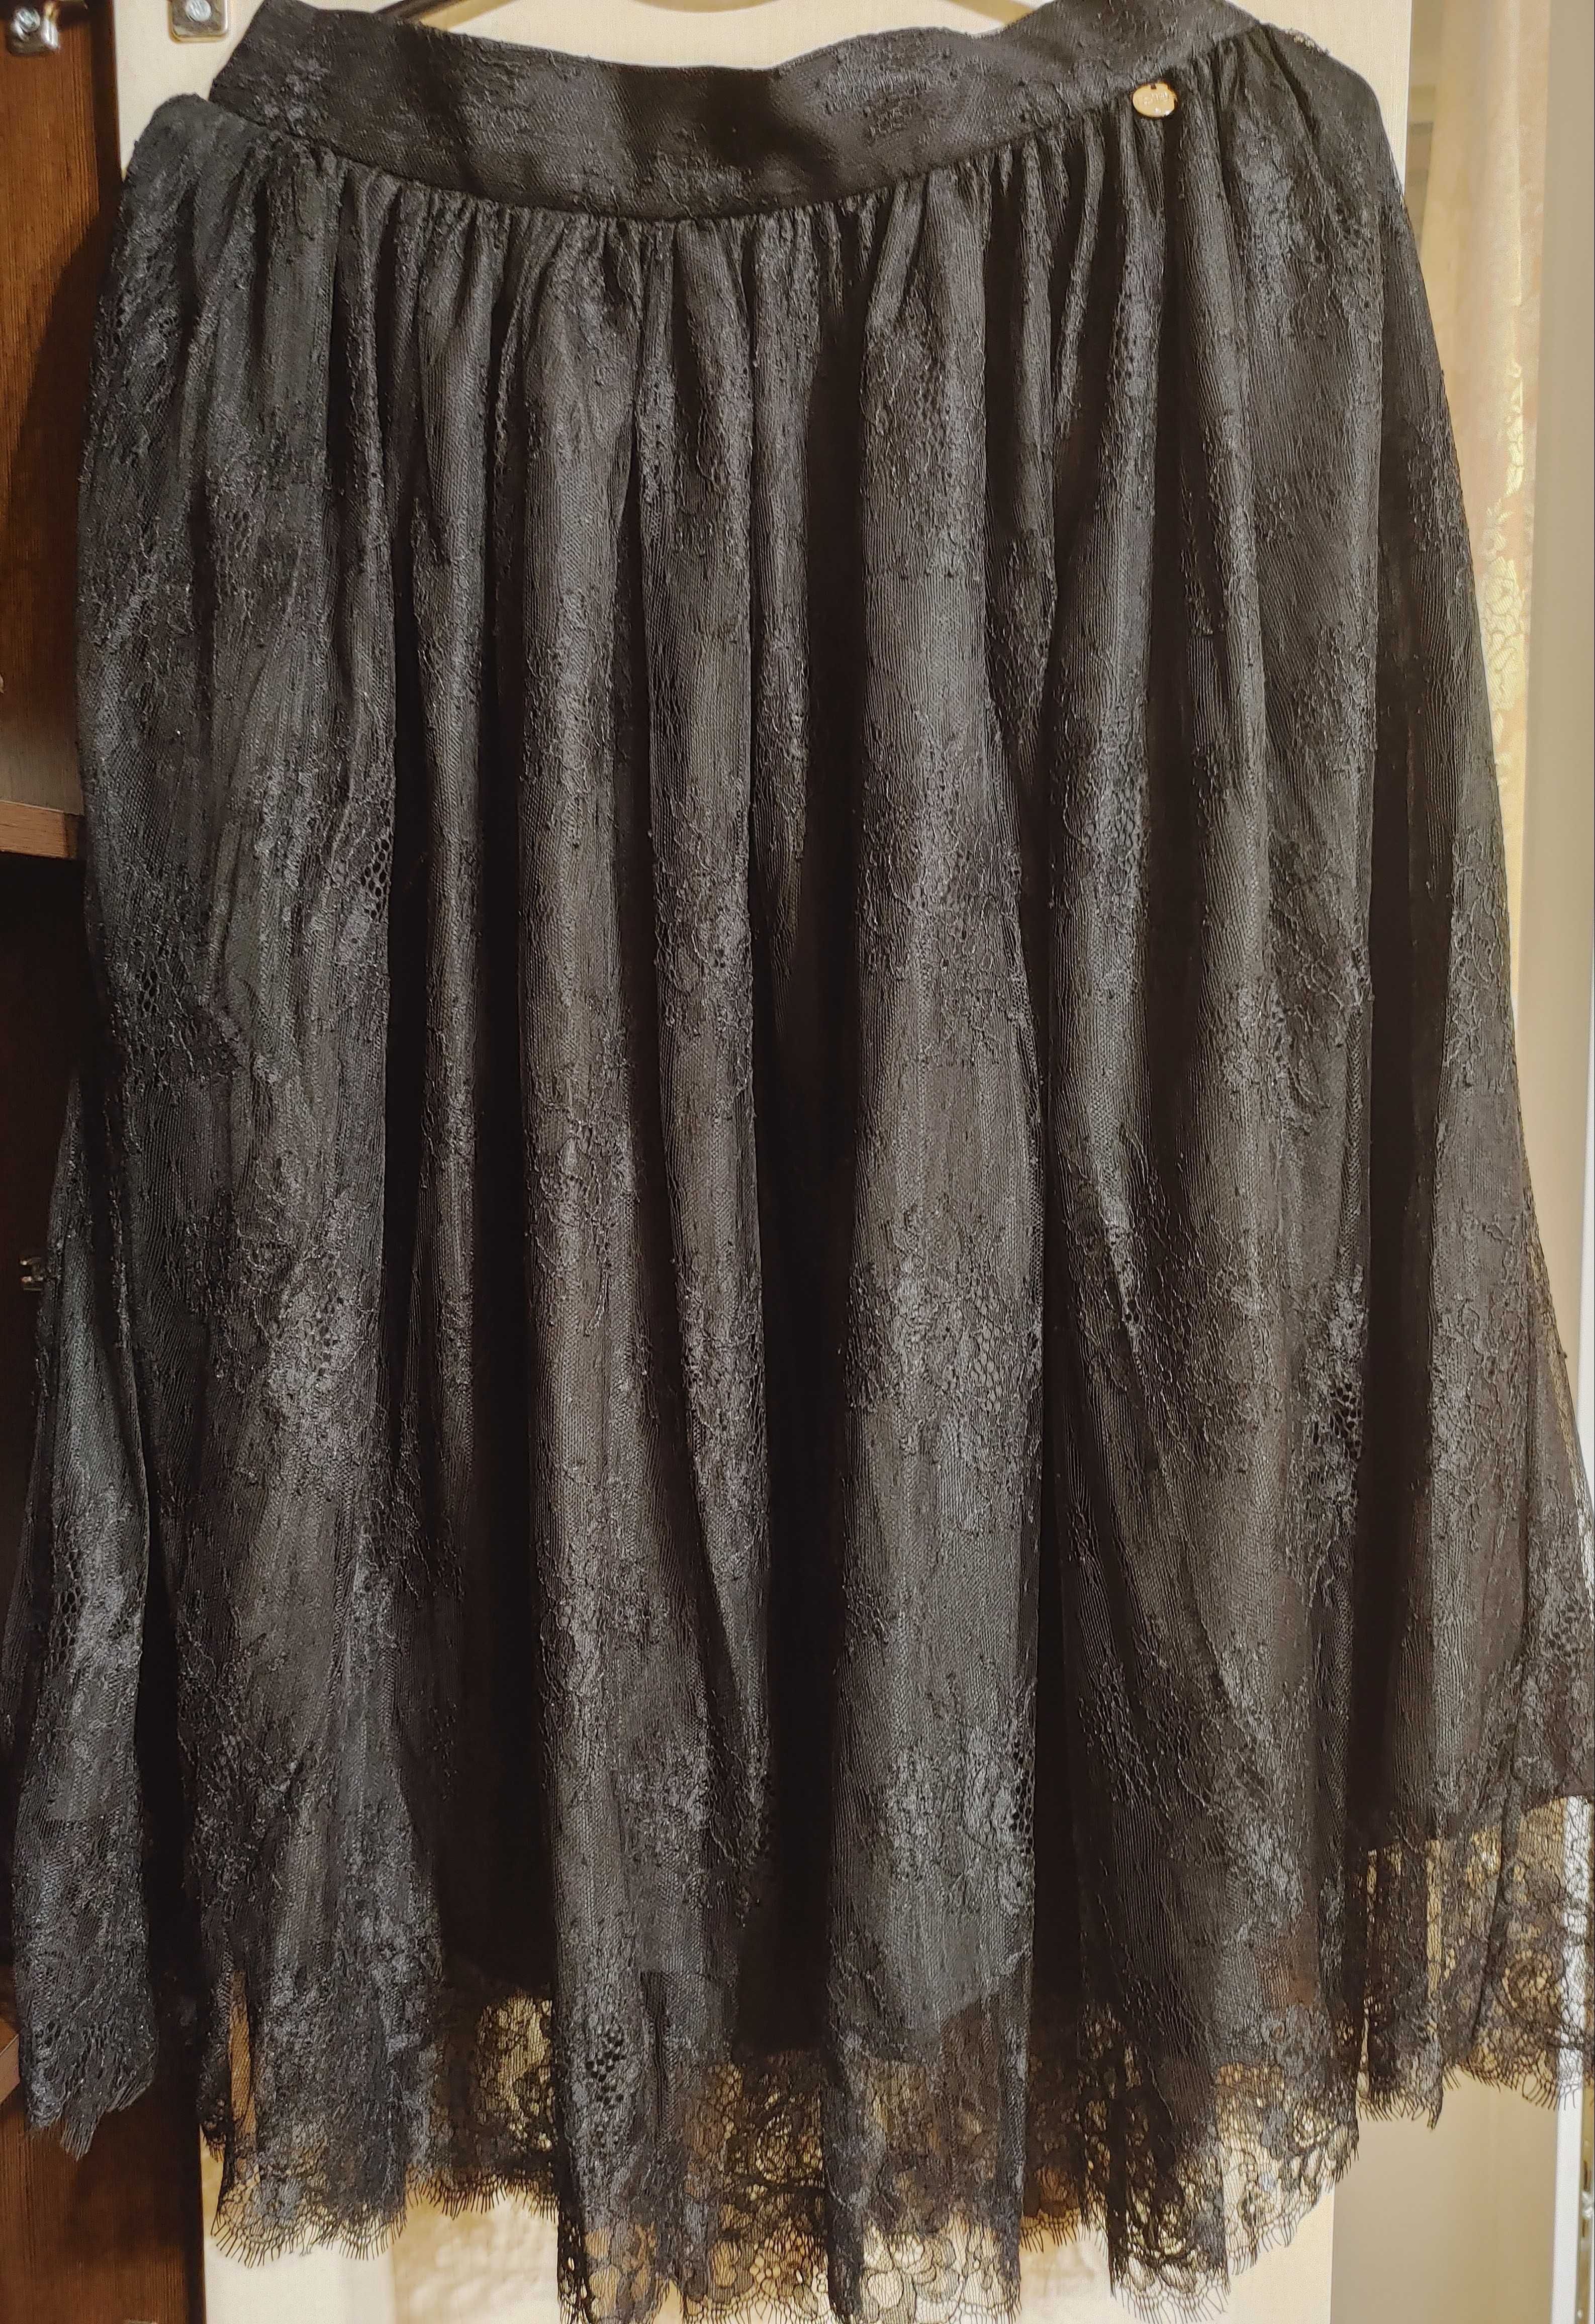 Изумительная кружевная юбка от Blugirl folies